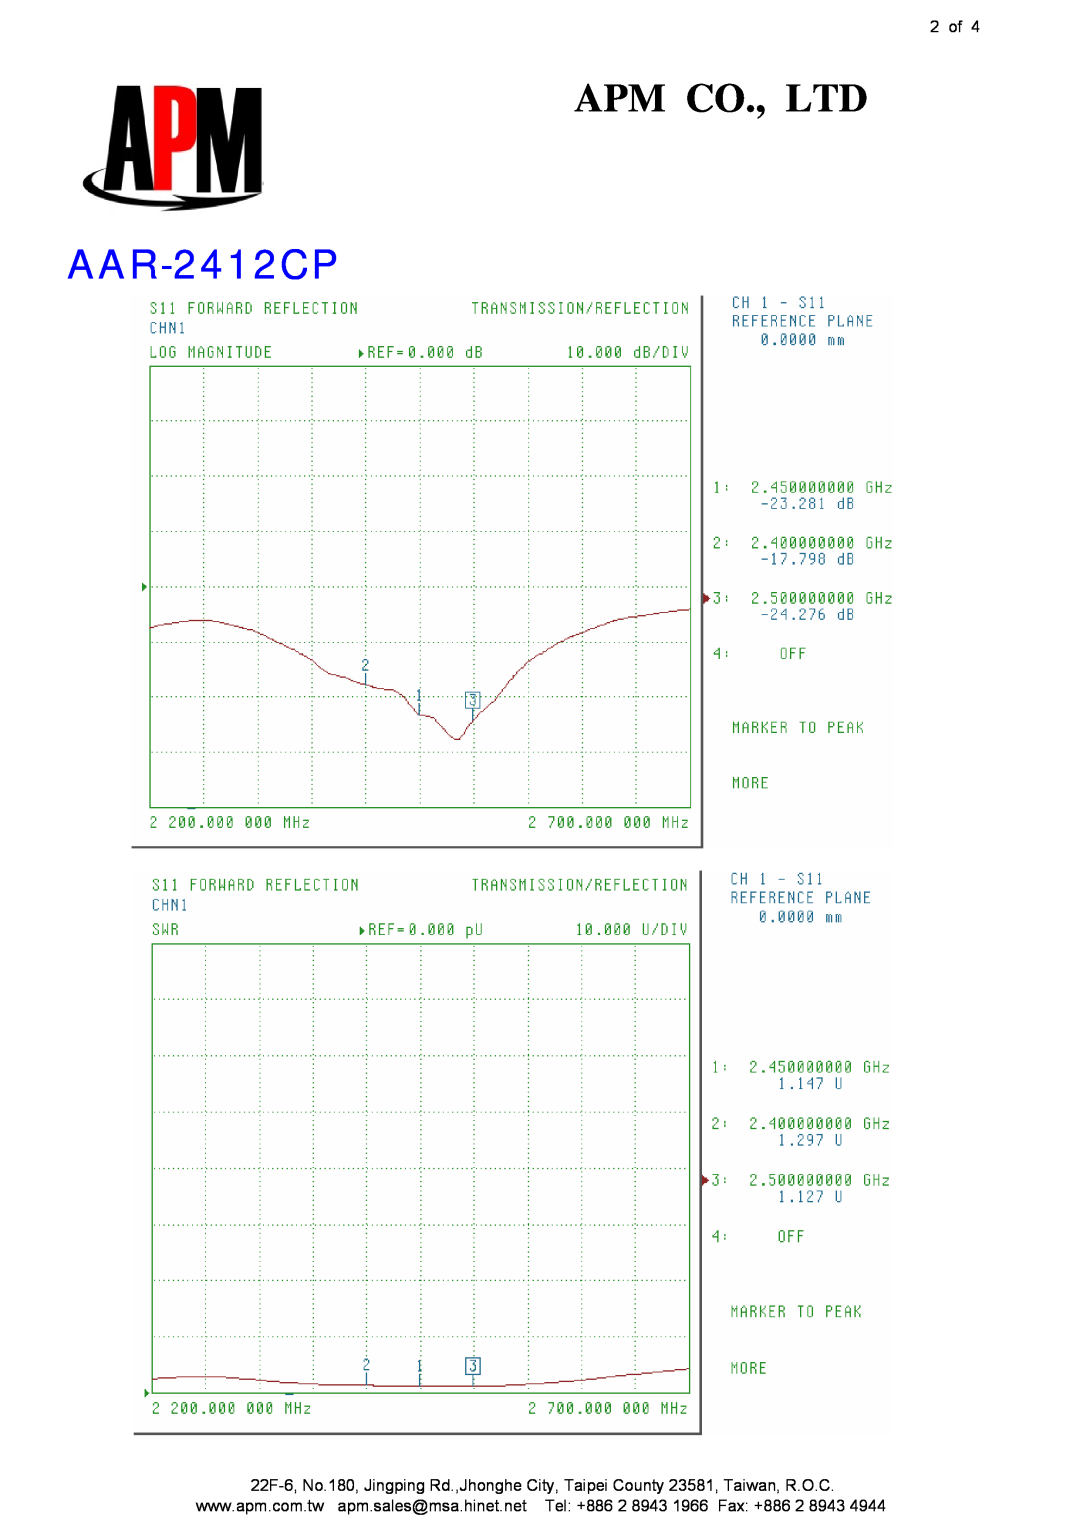 APM AAR-2412CP manual 2 of 